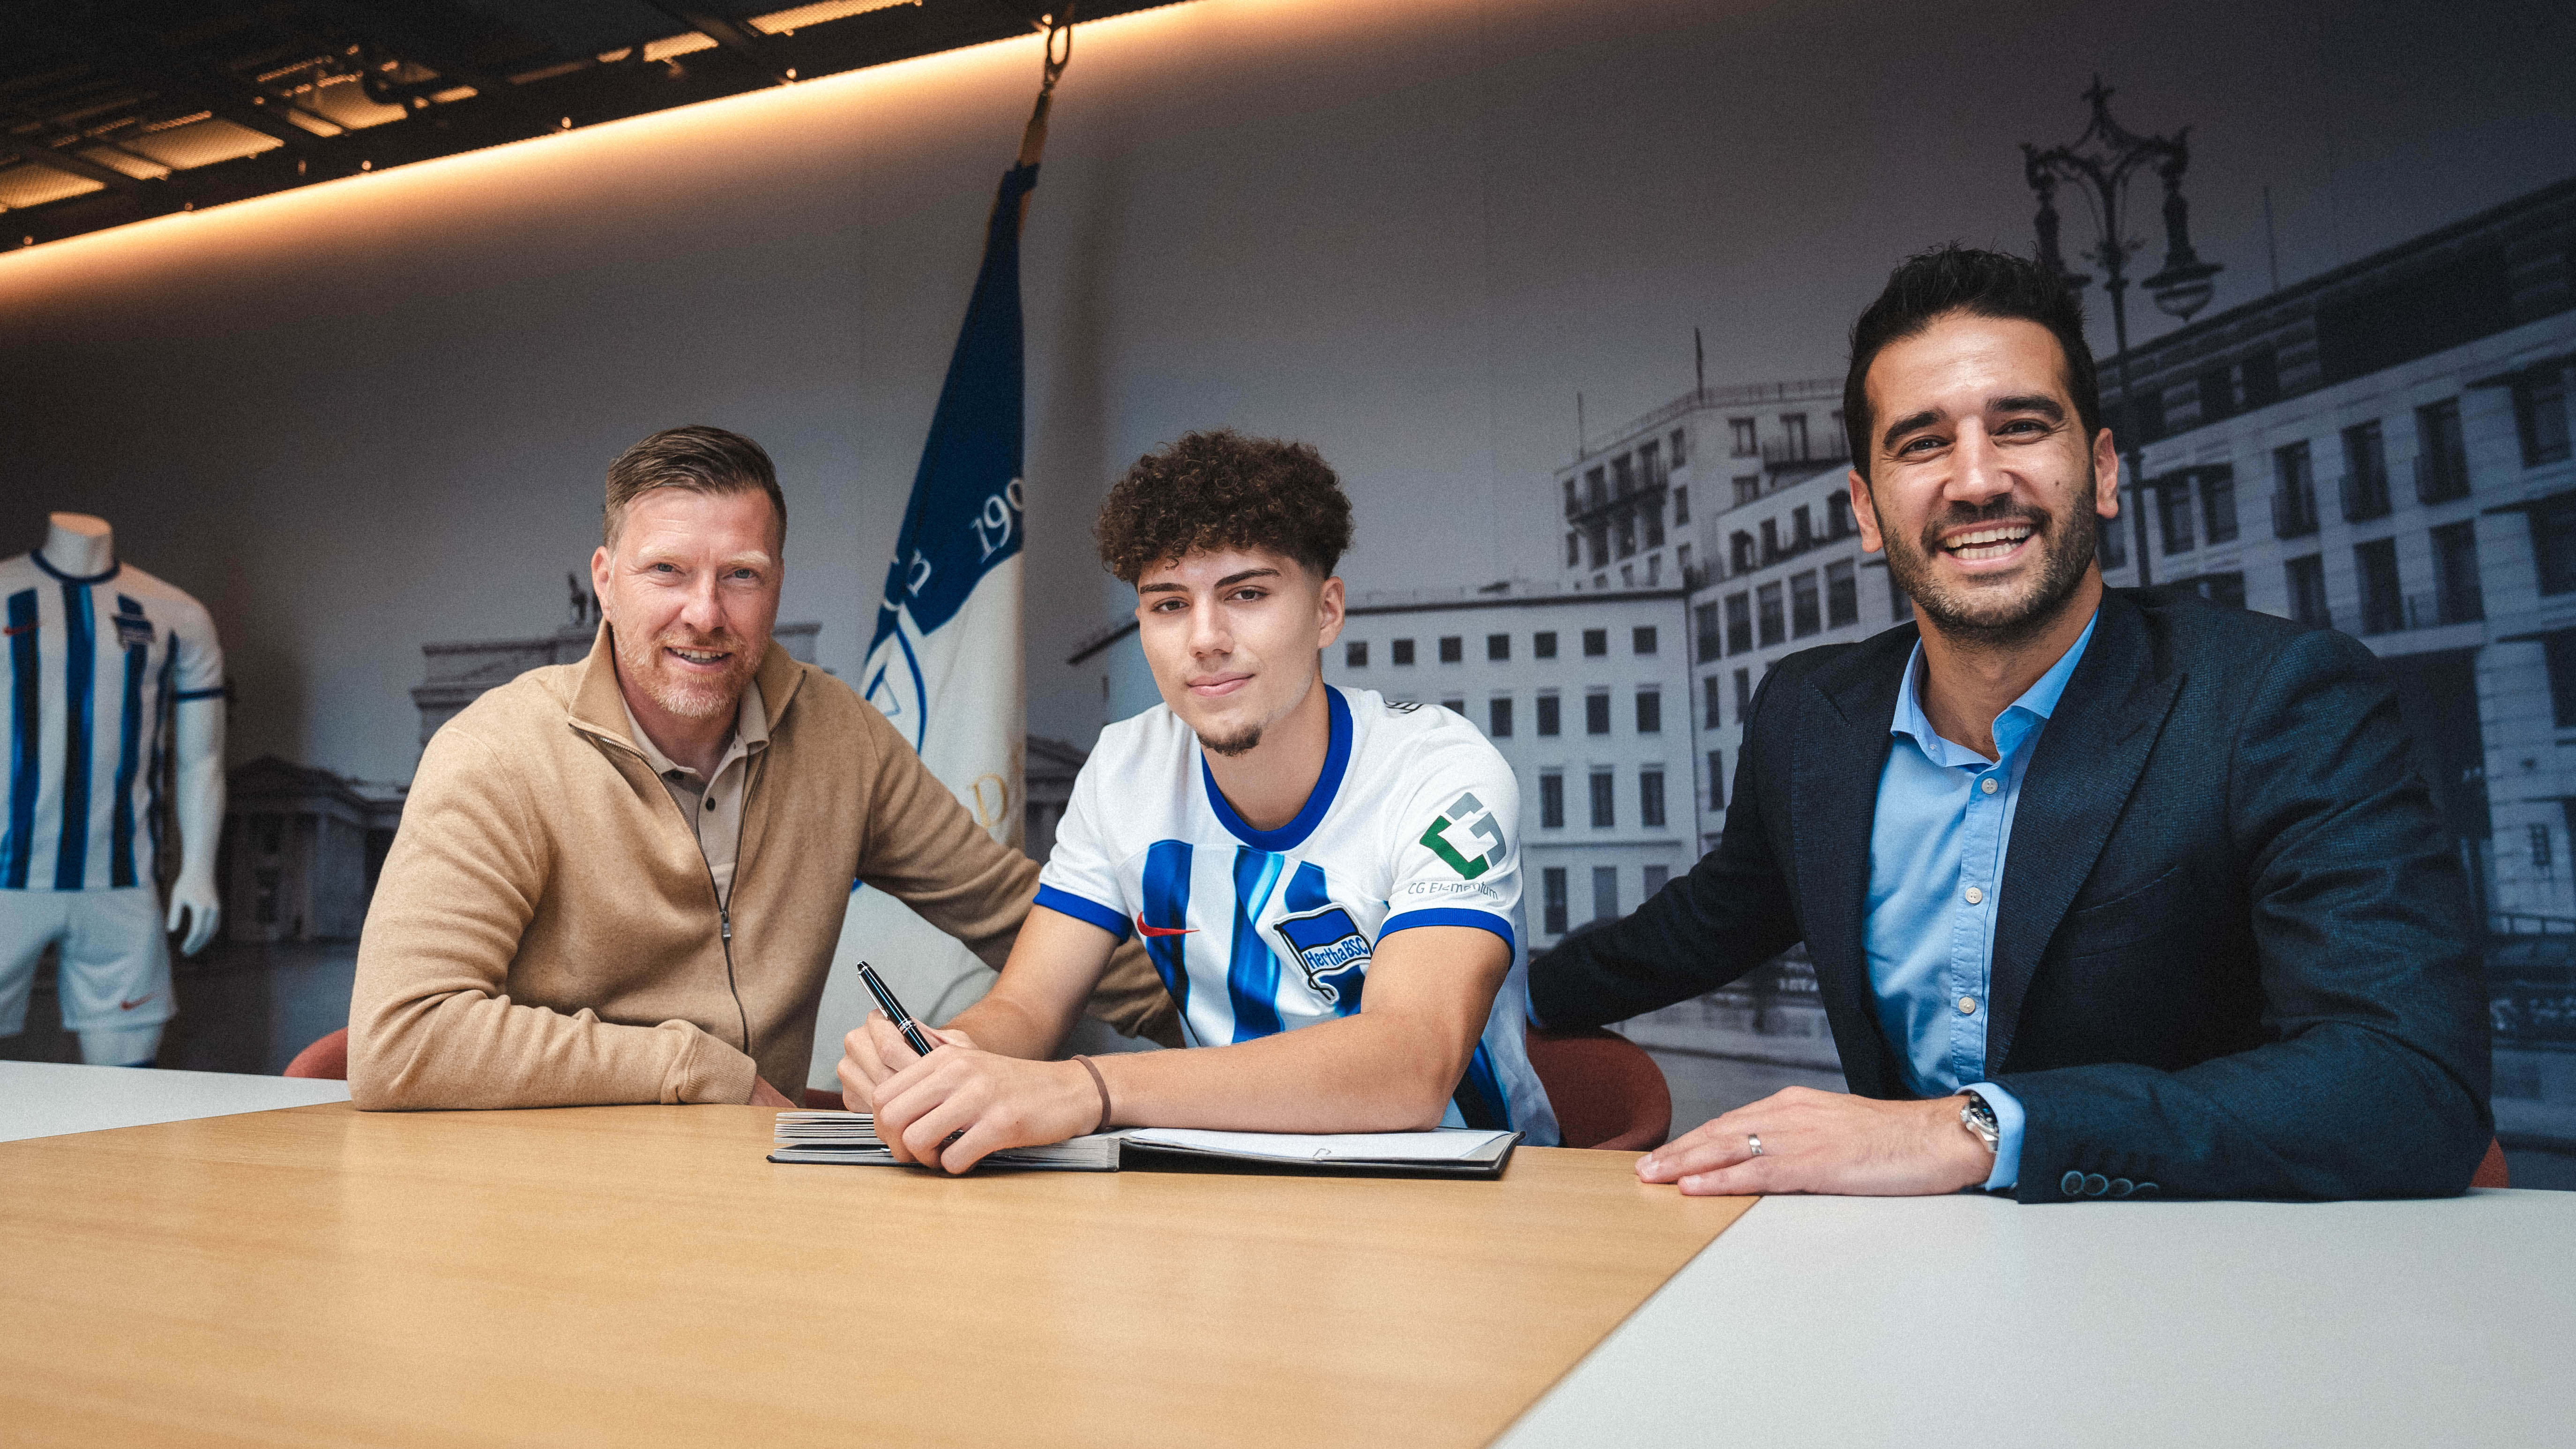 Zecke Neuendorf, Selim Telib and Sasan Gouhari smile as Telib signs his contract.